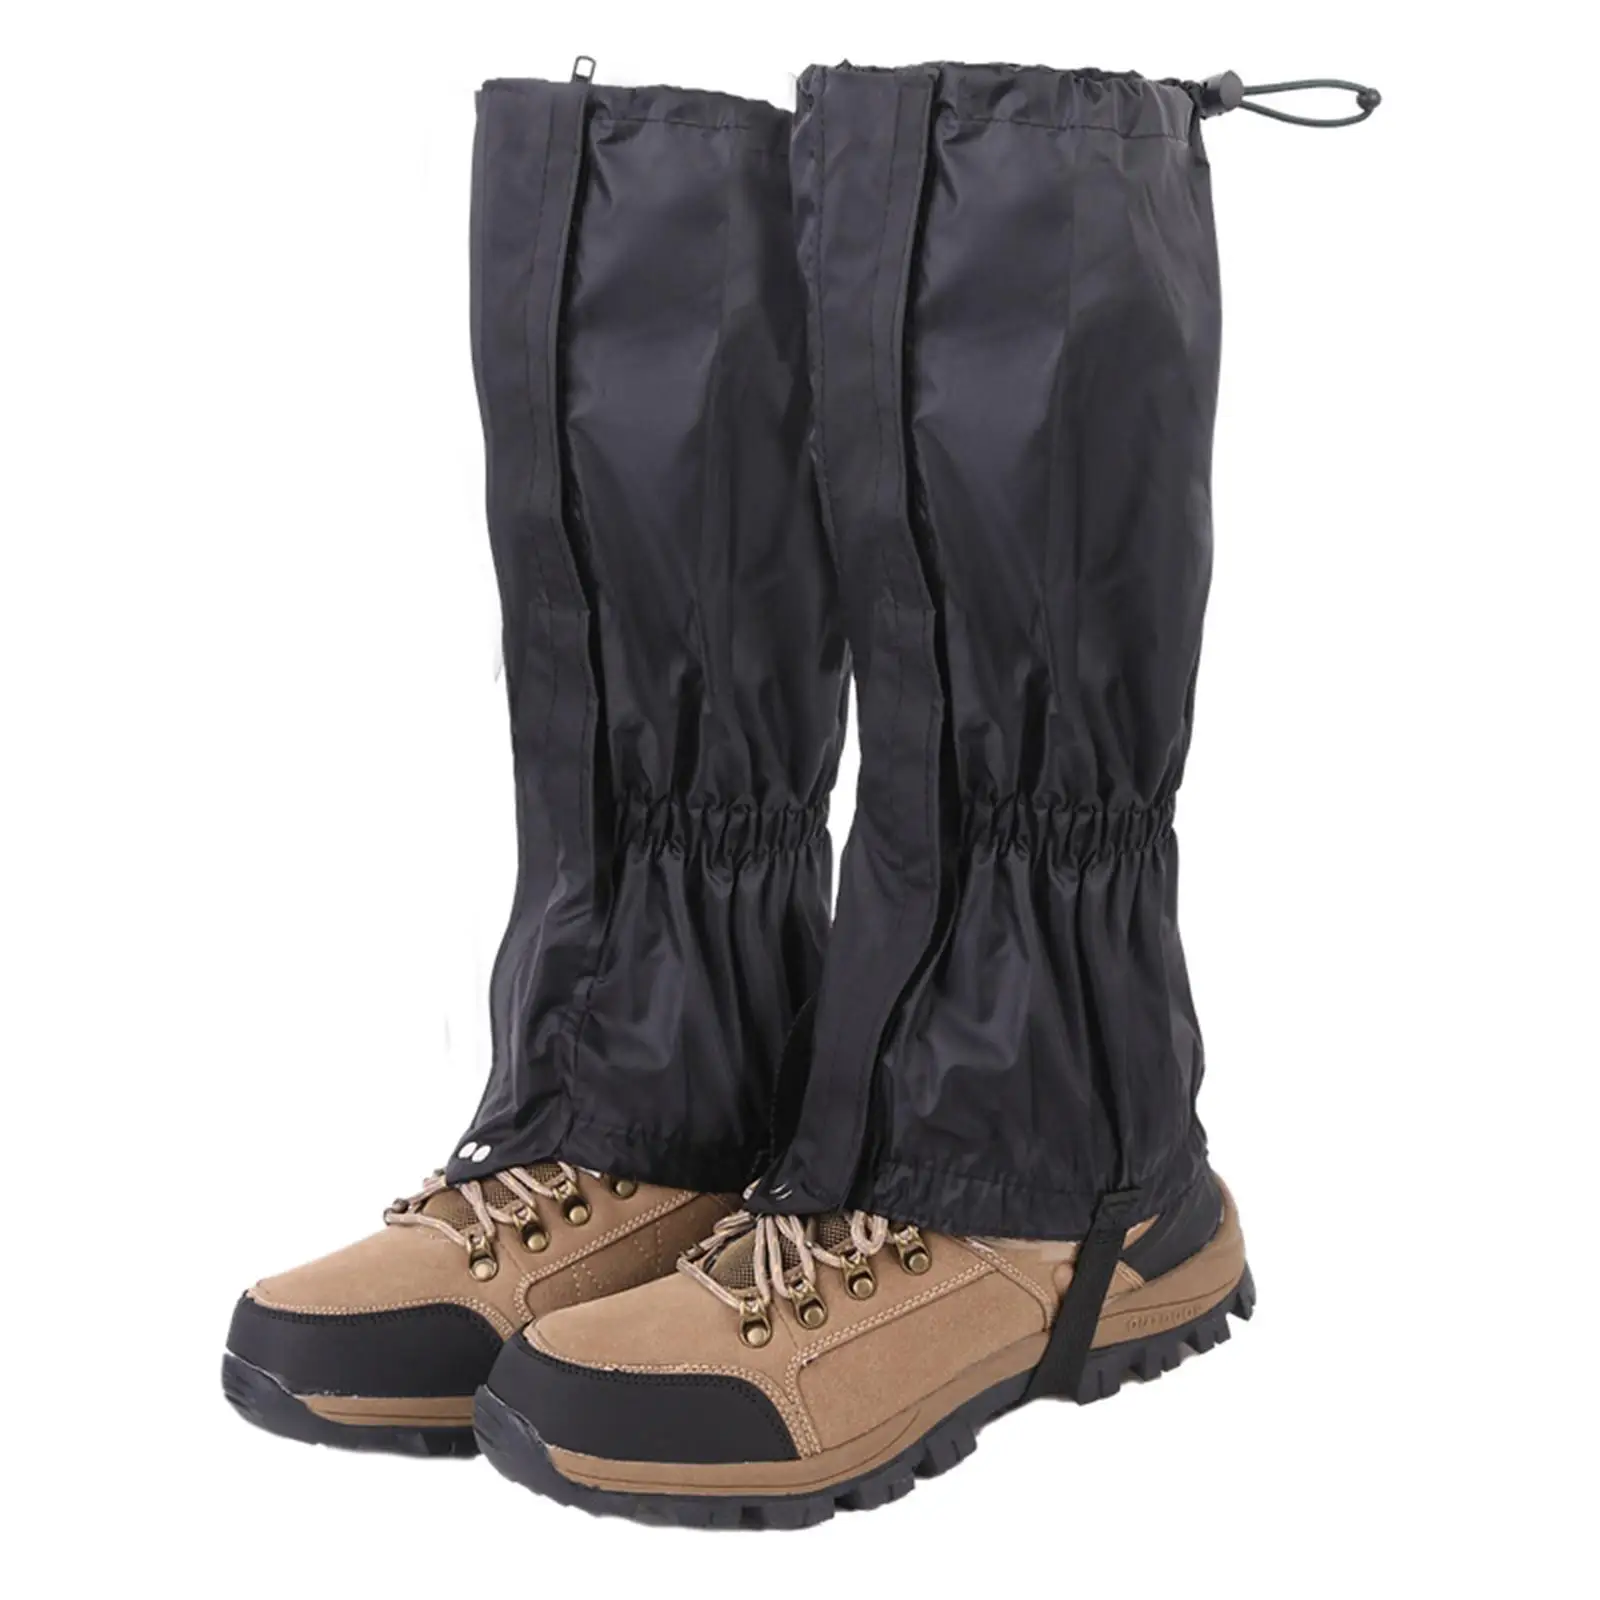 Snowproof Leg Gaiters Legging Guard Waterproof Lightweight Cover for Camping Outdoor Sports Climbing Mountaineering Trekking